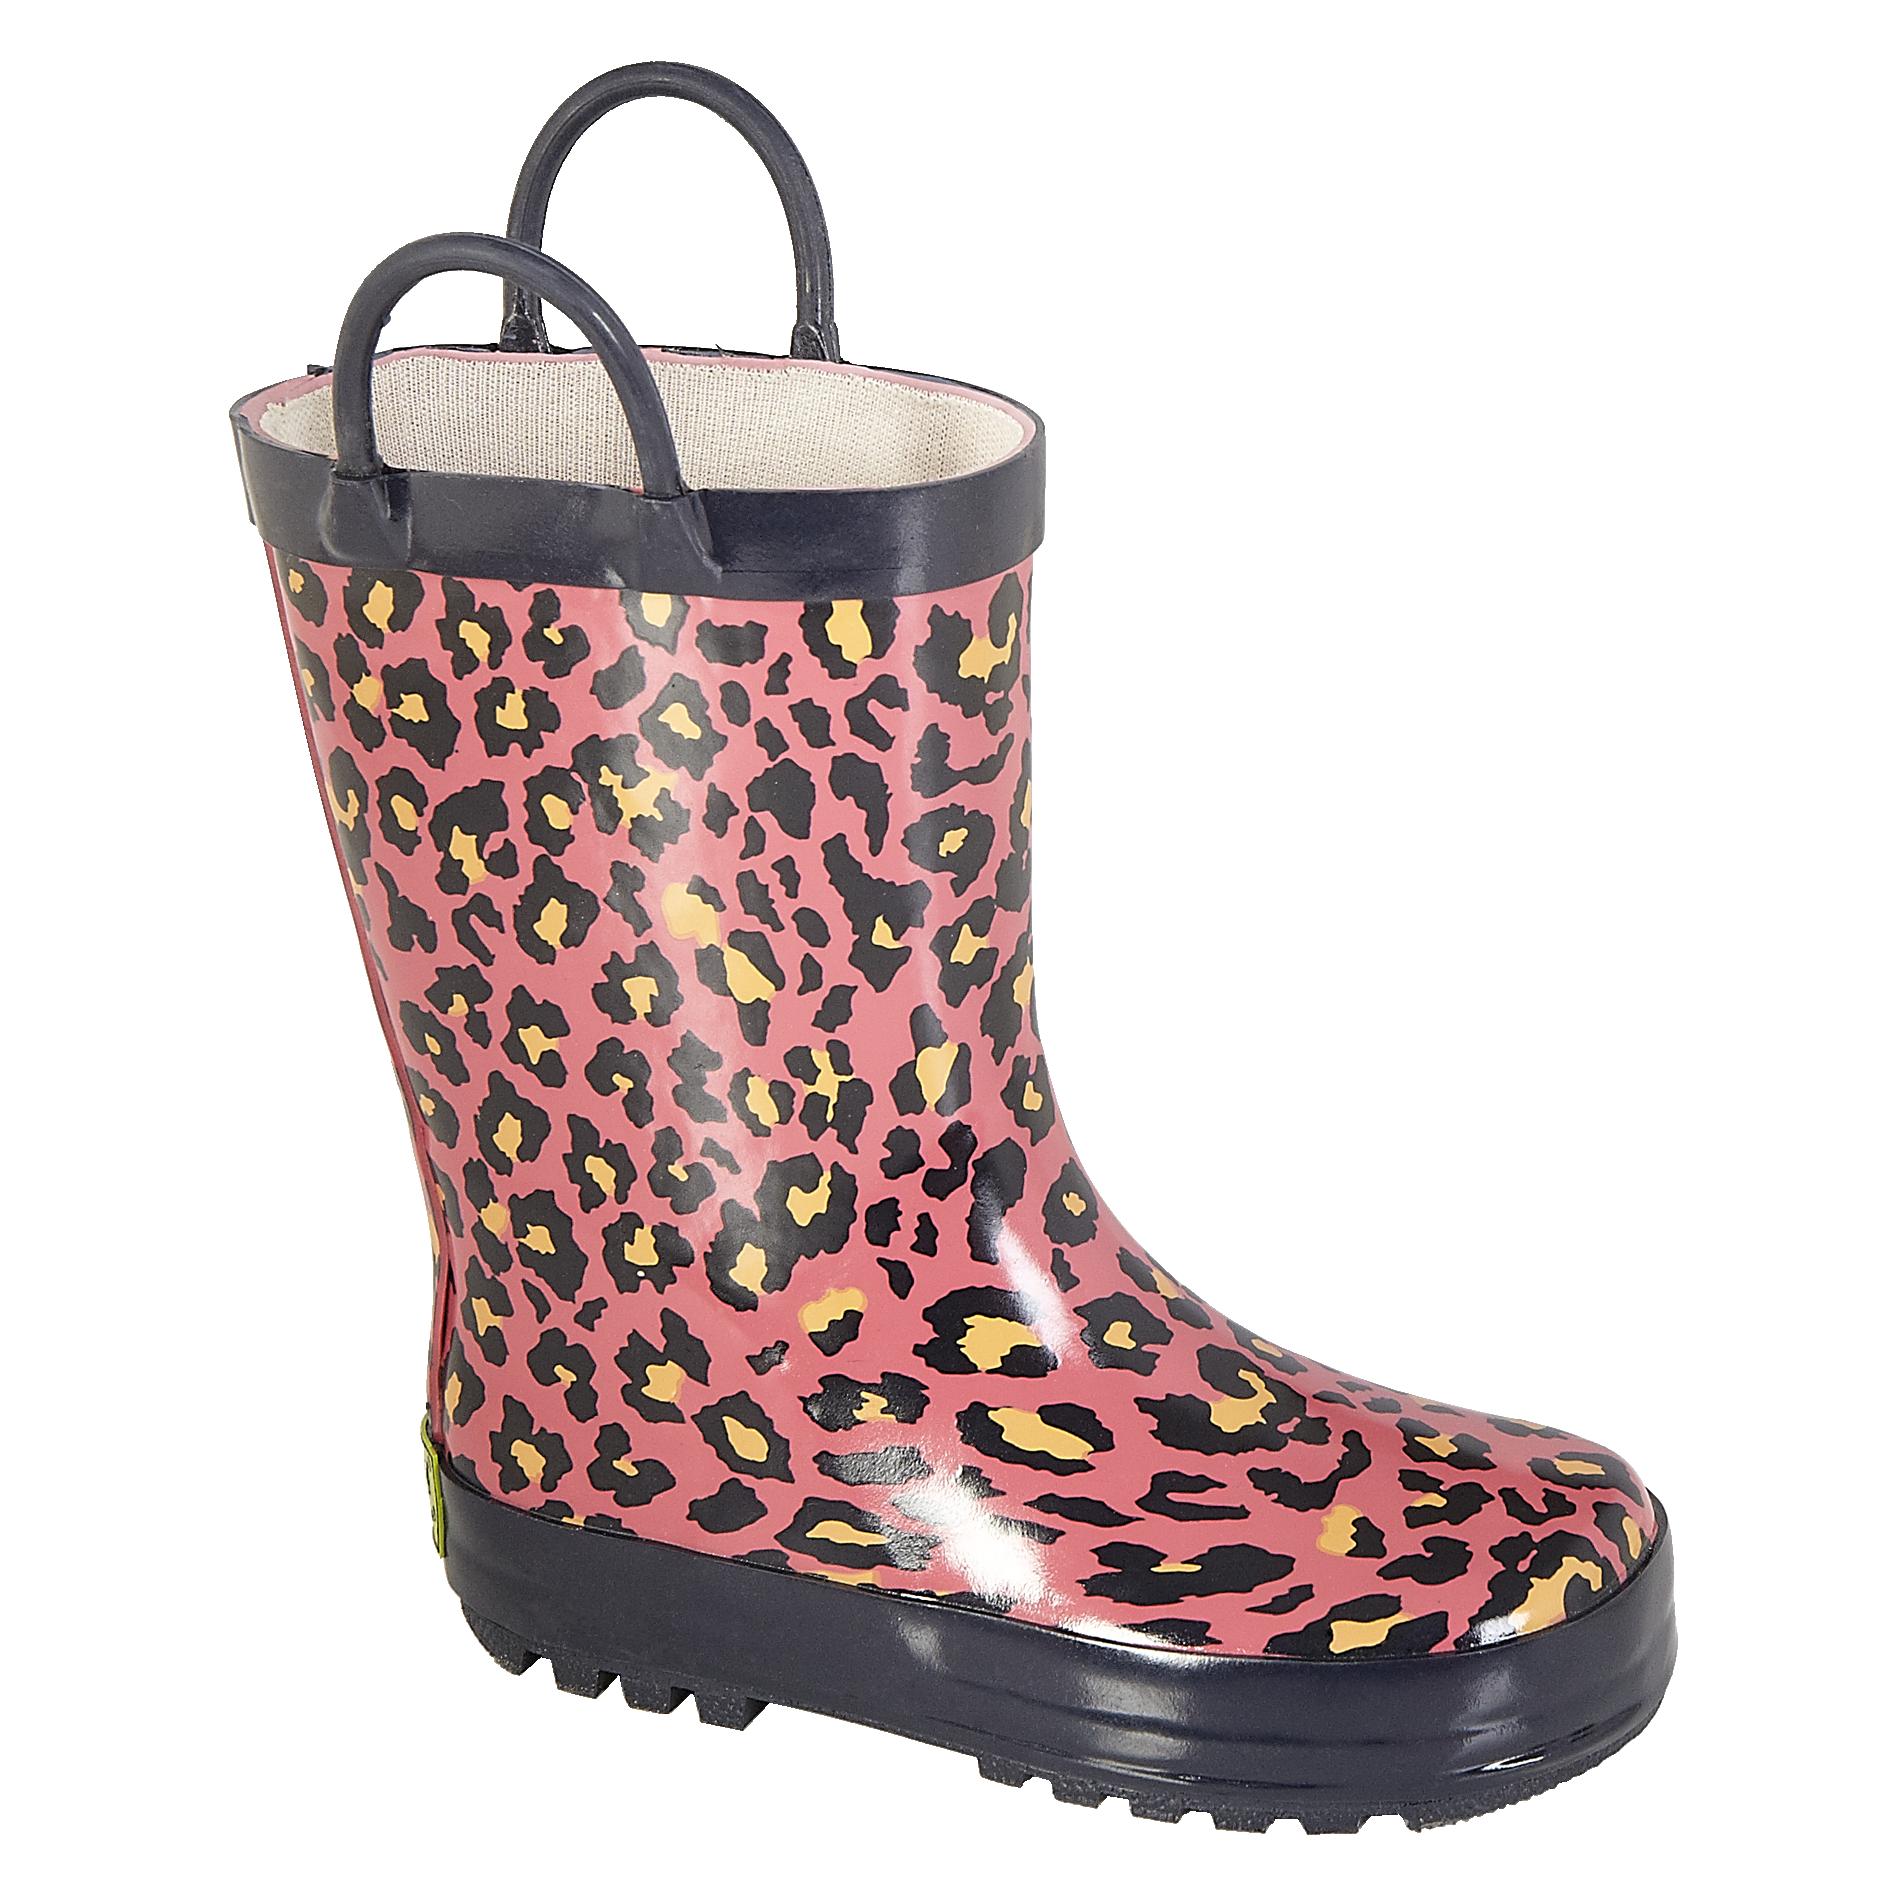 Western Chief Toddler Girl's Rainboot Bright Leopard - Black